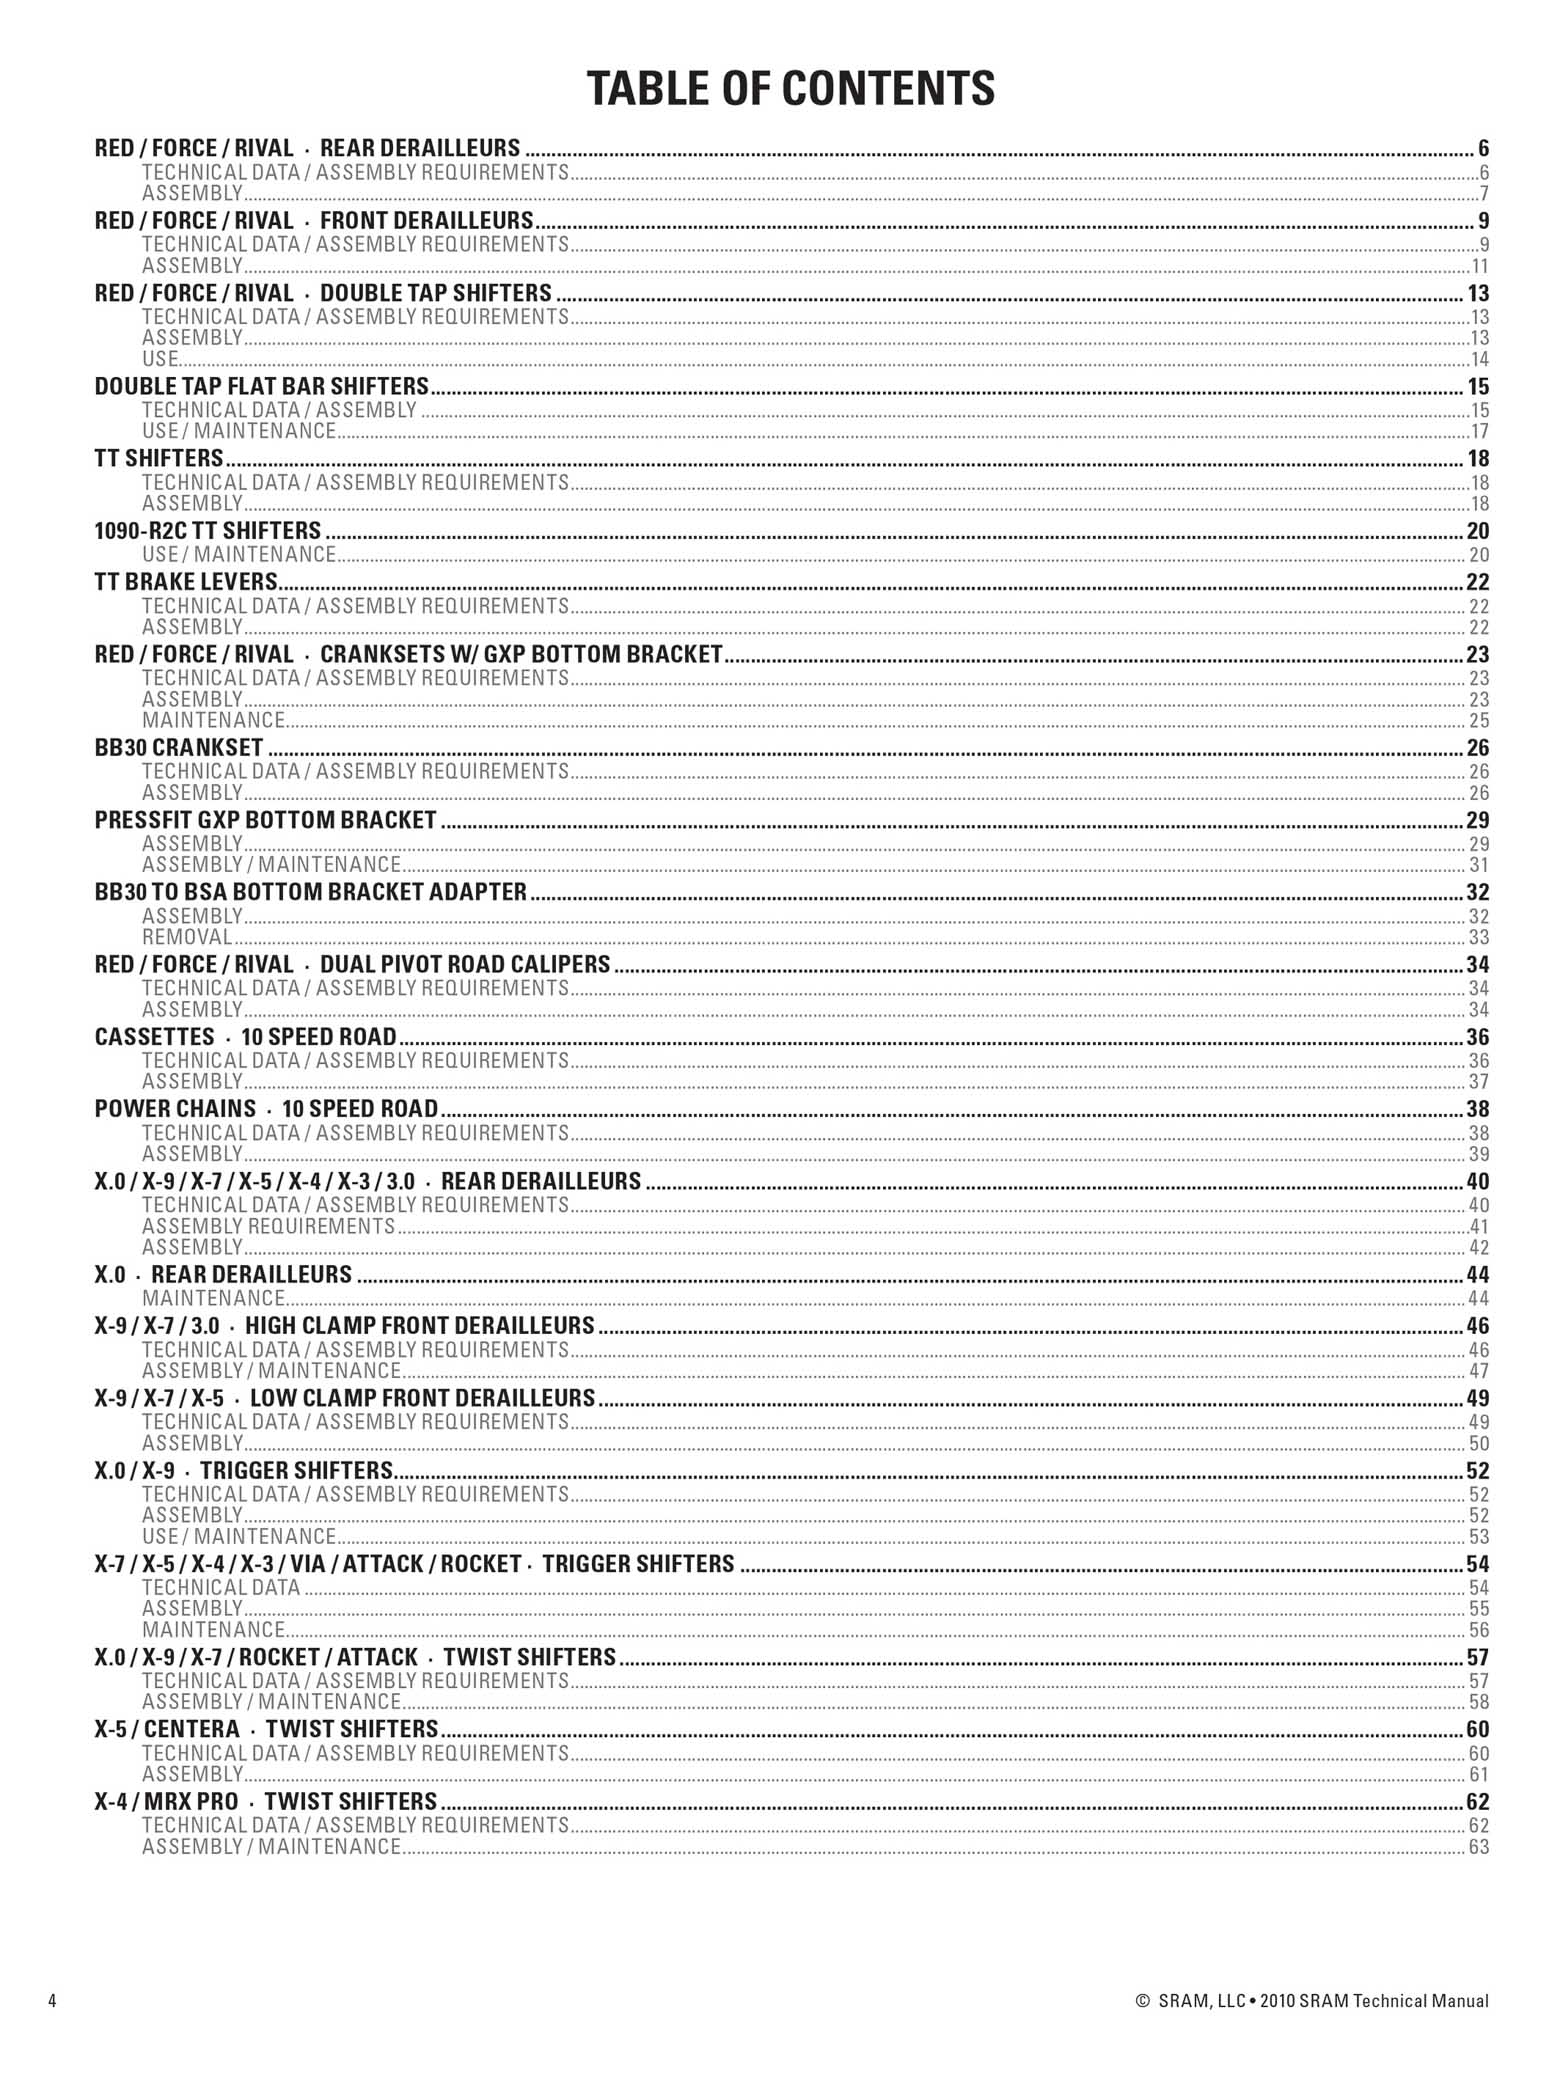 SRAM Technical Manual 2010 page 004 main image